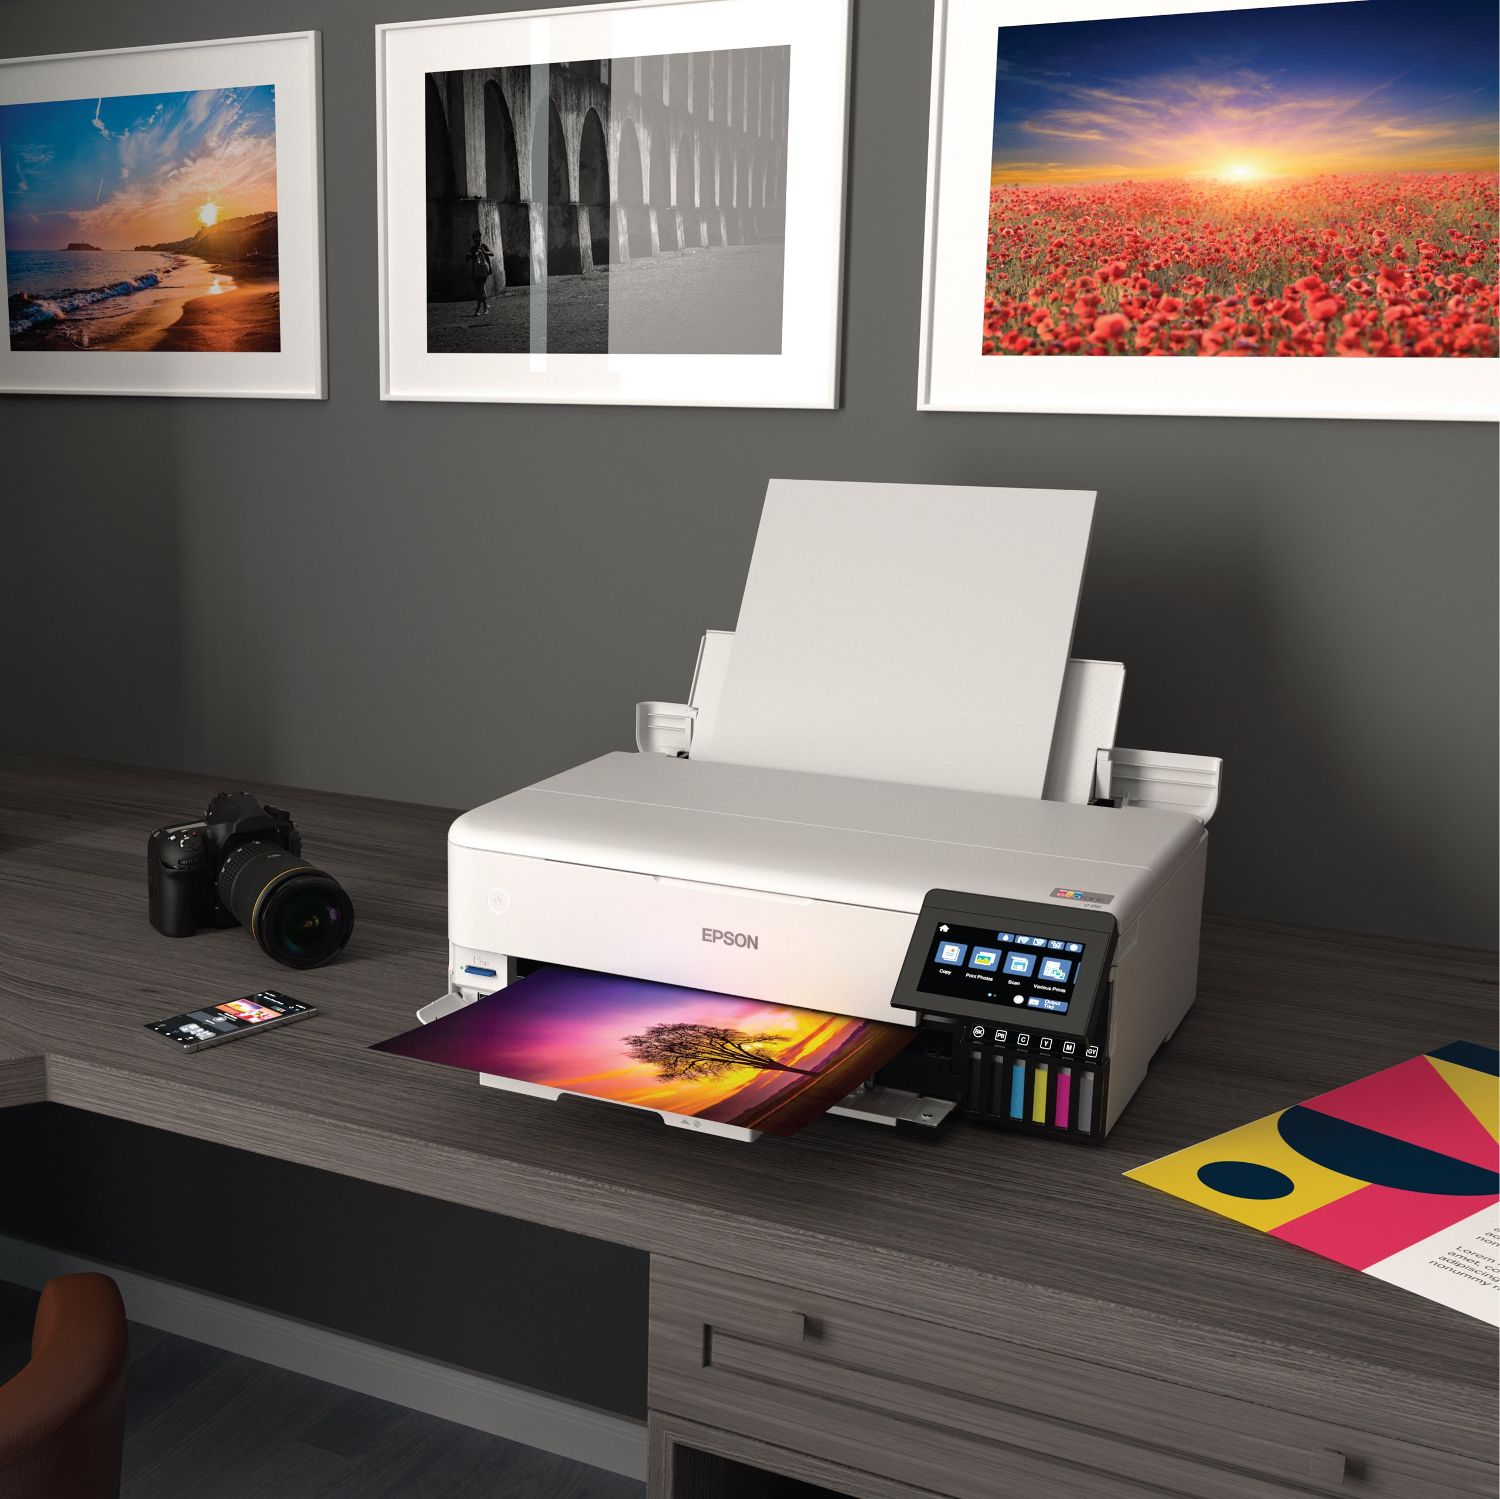 Epson ET-8550 Printer on a desk. It's multifuction